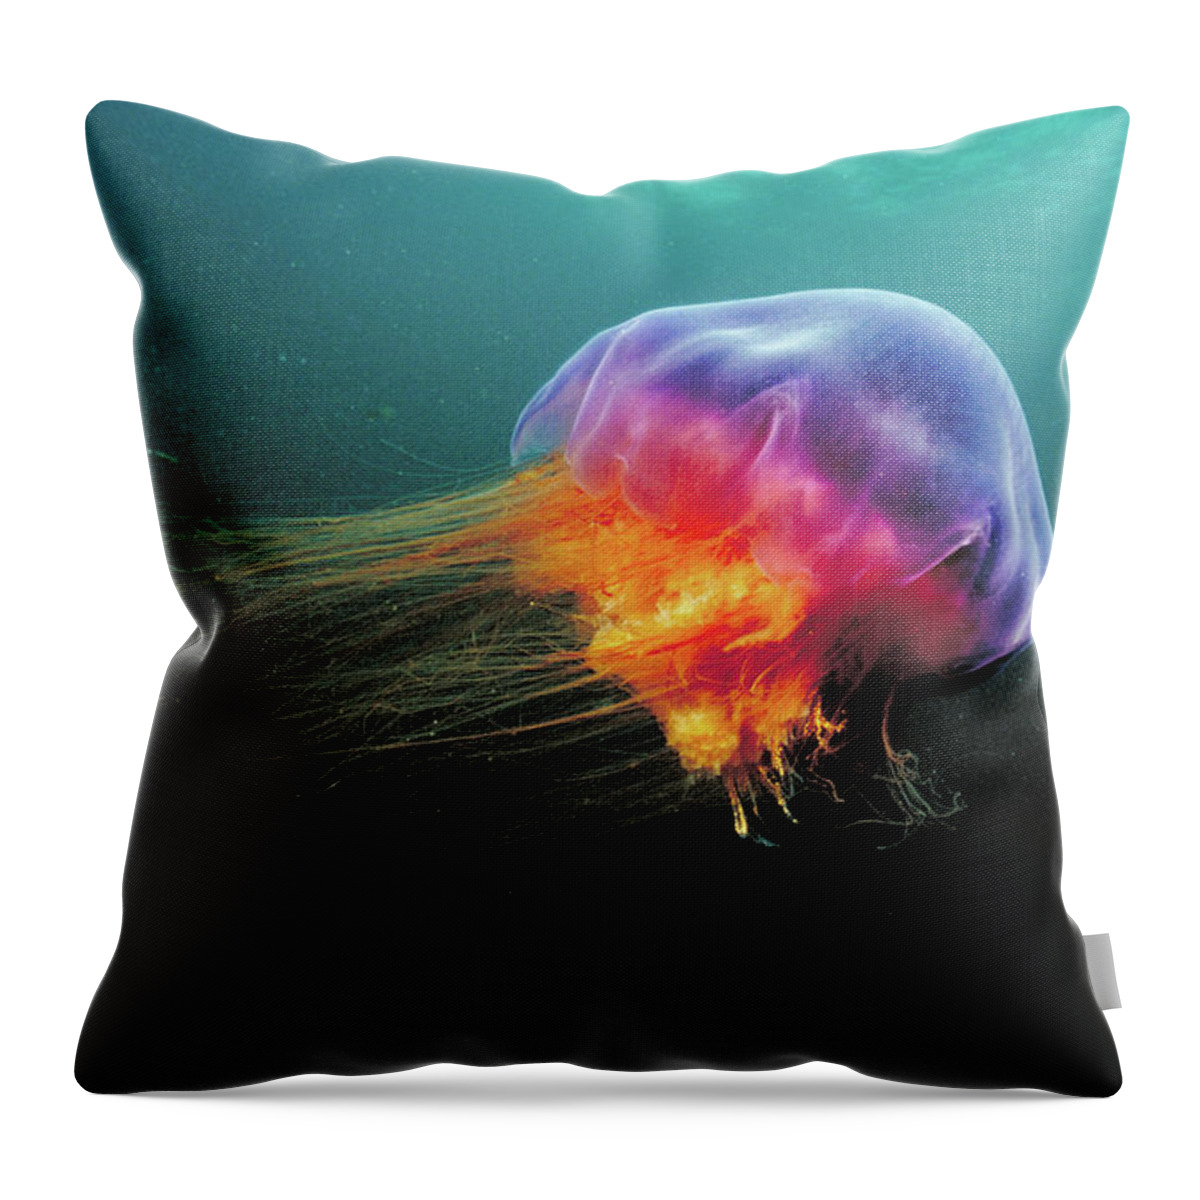 00301208 Throw Pillow featuring the photograph Lions Mane Cyanea Capillata Jellyfish by Scott Leslie